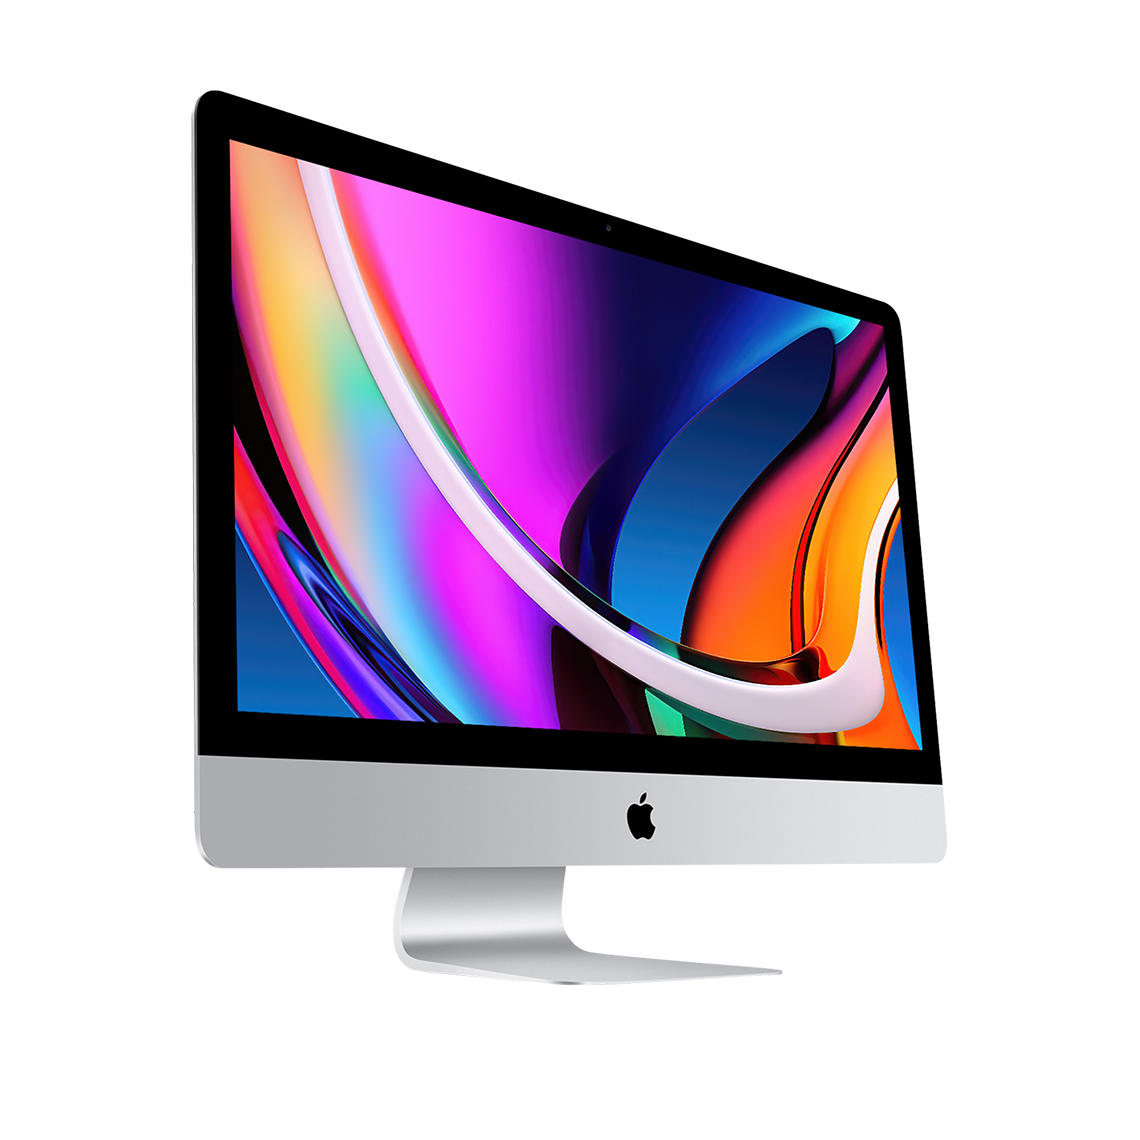 2020 iMac 27-inch 5K - Intel Core i7, 8GB, 512GB Flash, Radeon Pro 5700 8GB, Grade A